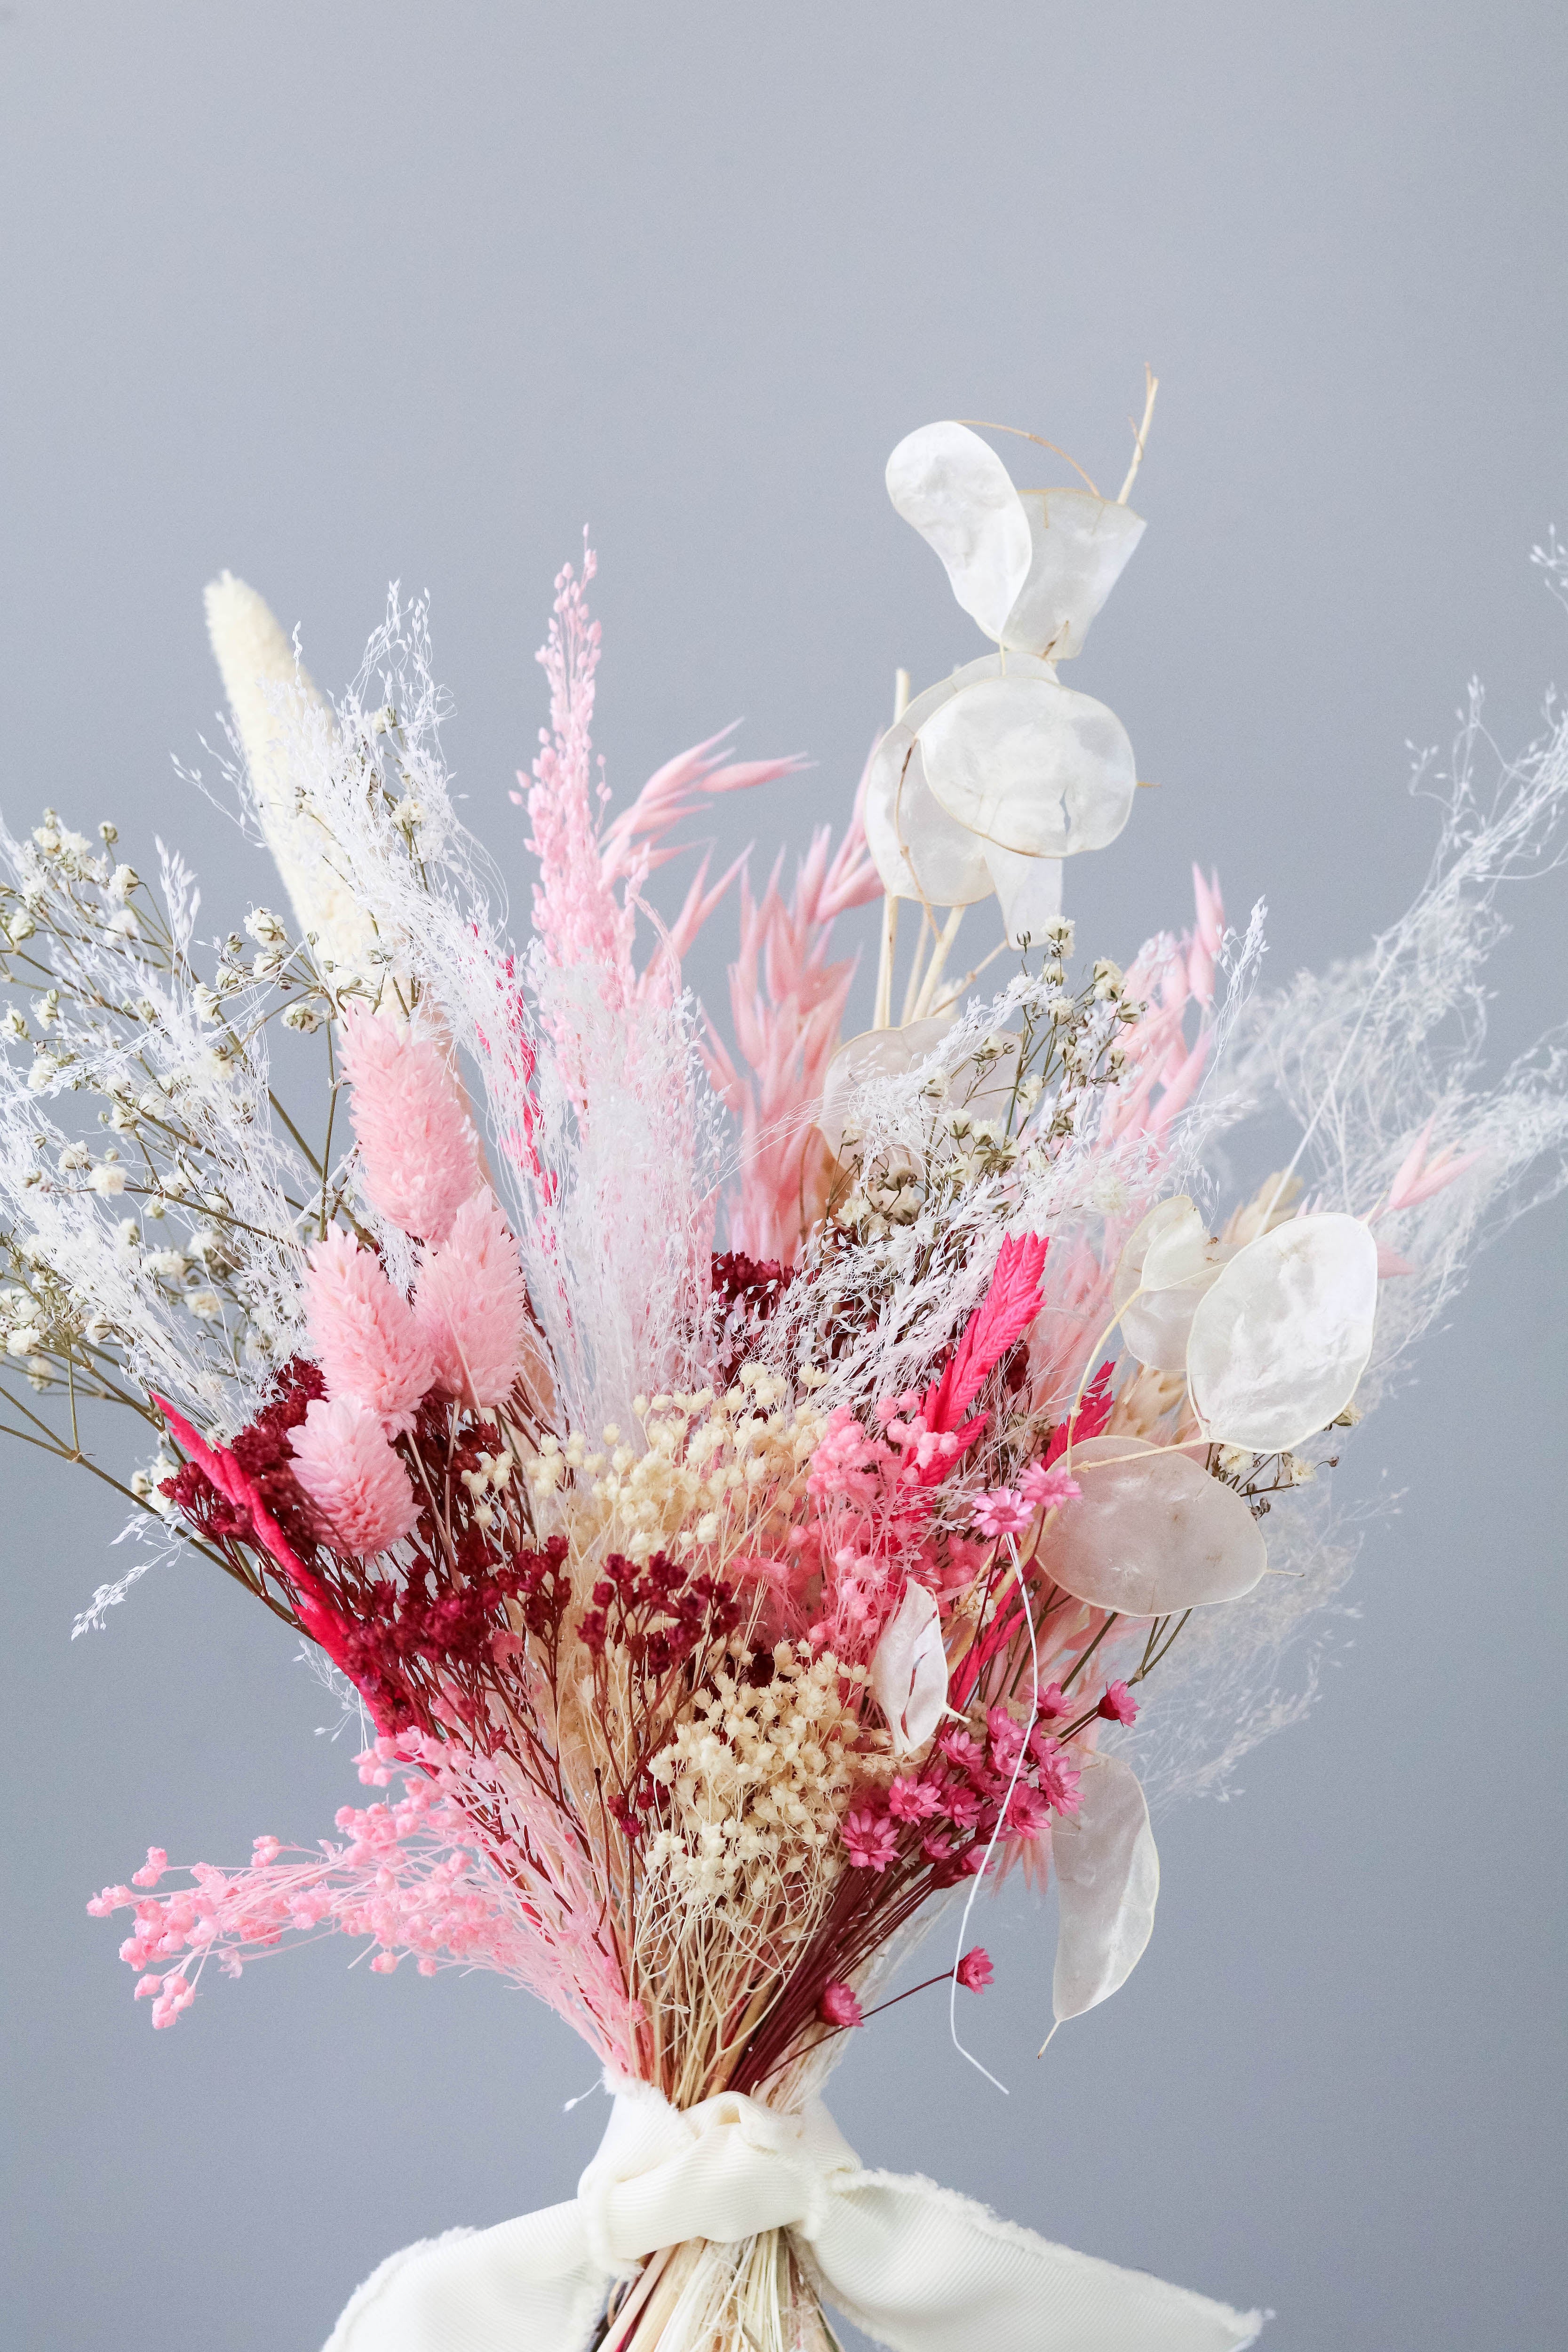 Everblooms - Perri Petite Bouquet (Pink/White Tone)